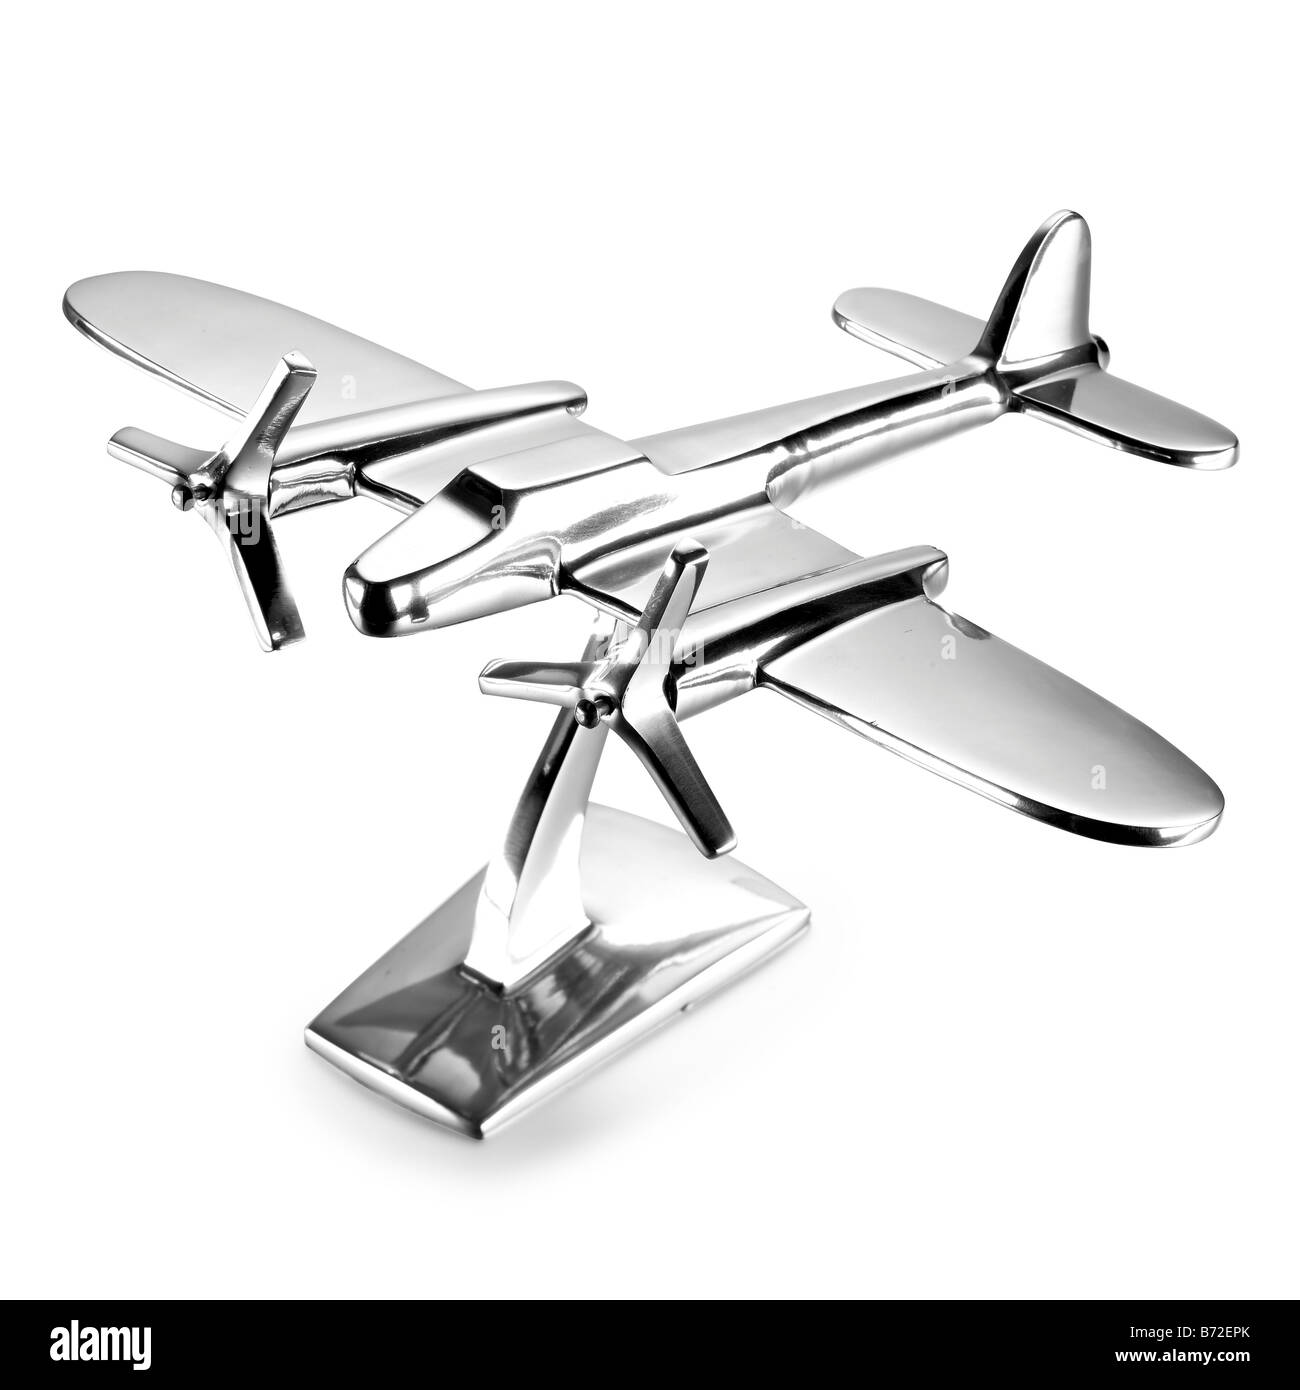 metal airplane desk ornament model Stock Photo